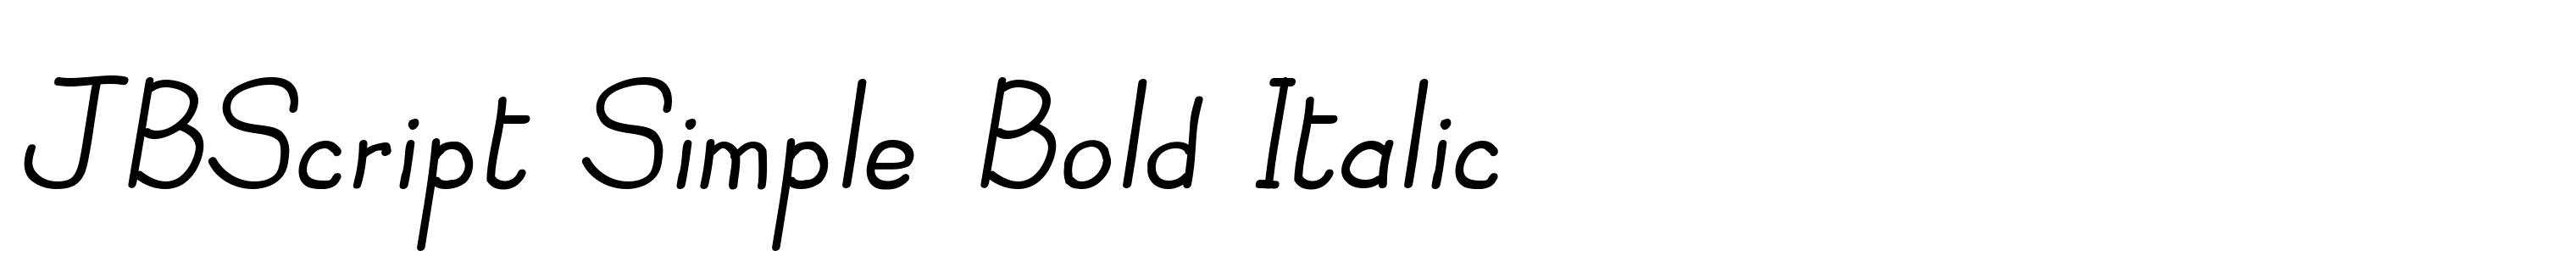 JBScript Simple Bold Italic